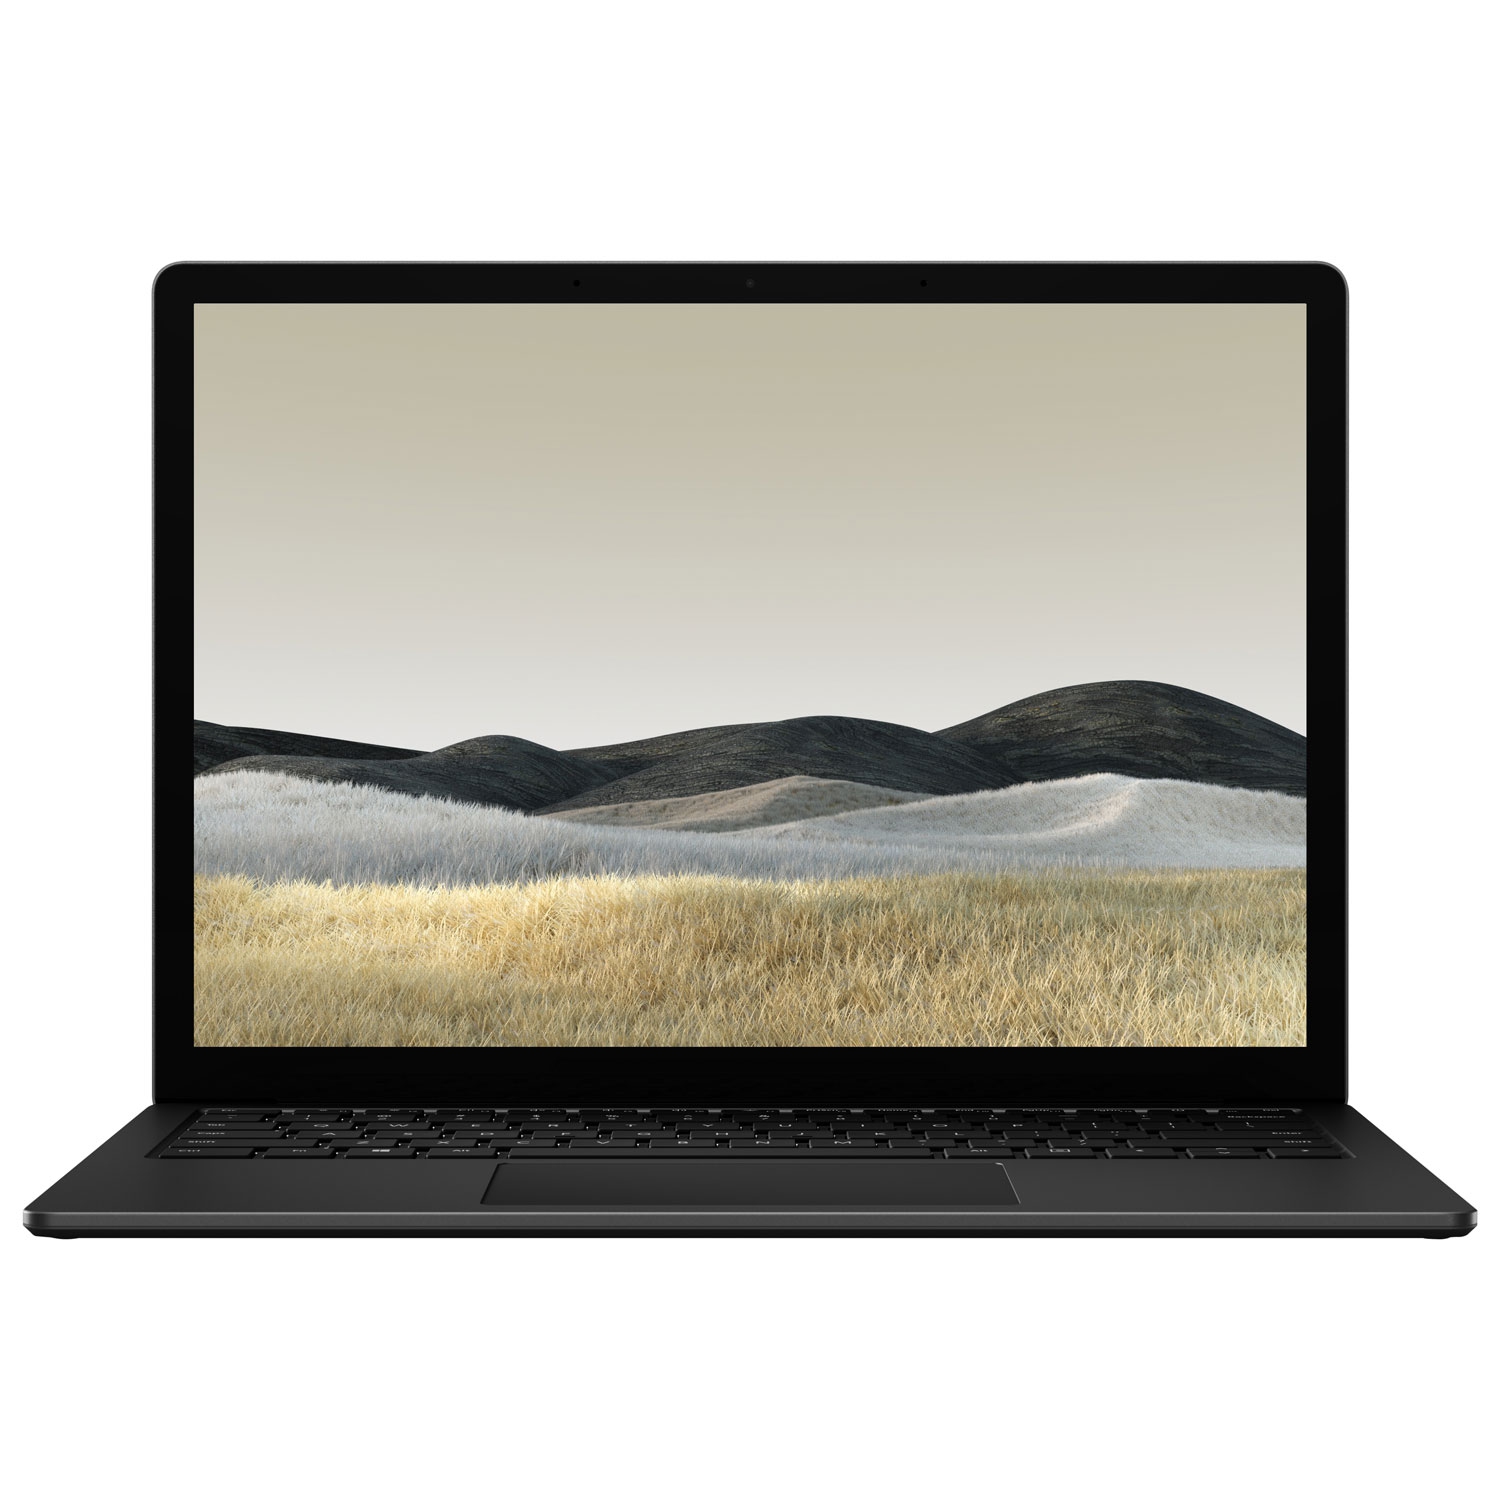 Microsoft Surface Laptop 3 15" Touchscreen Laptop - Intel Core i7 1065G7 - 32 GB RAM - 1TB SSD - English ( latest model) - Black matte - Open box